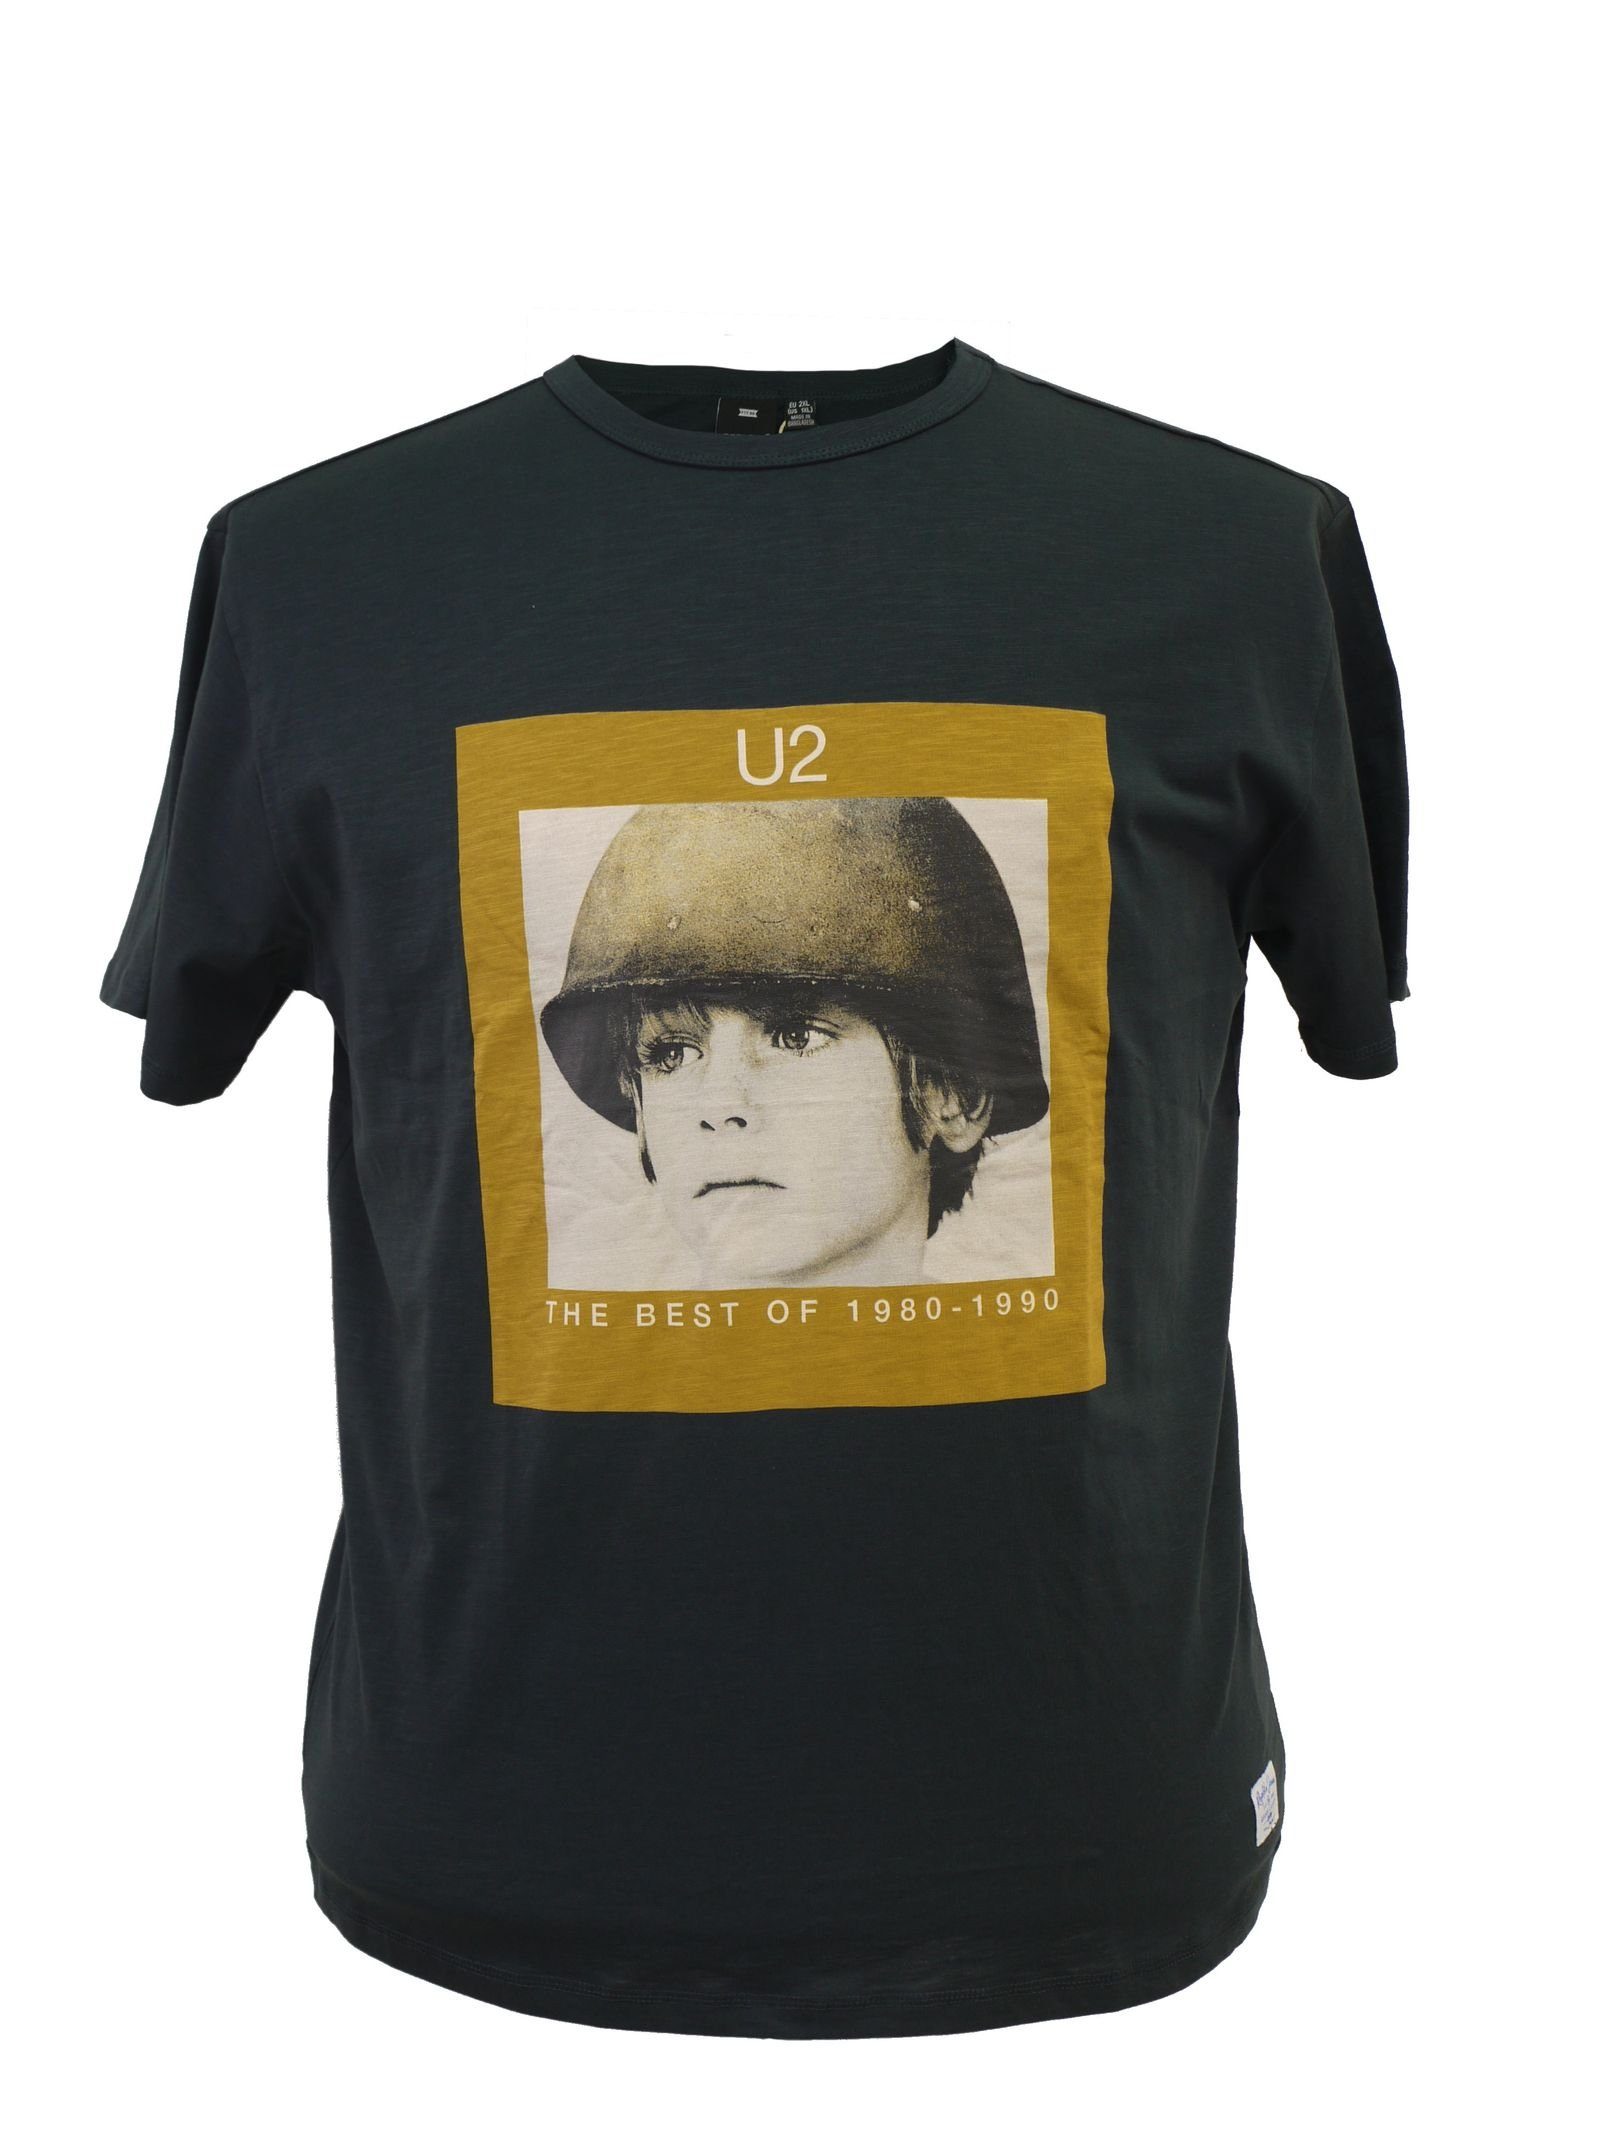 replika T-Shirt Replika XXL Shirt U2 "THE BEST OF" 1980-1990 | T-Shirts